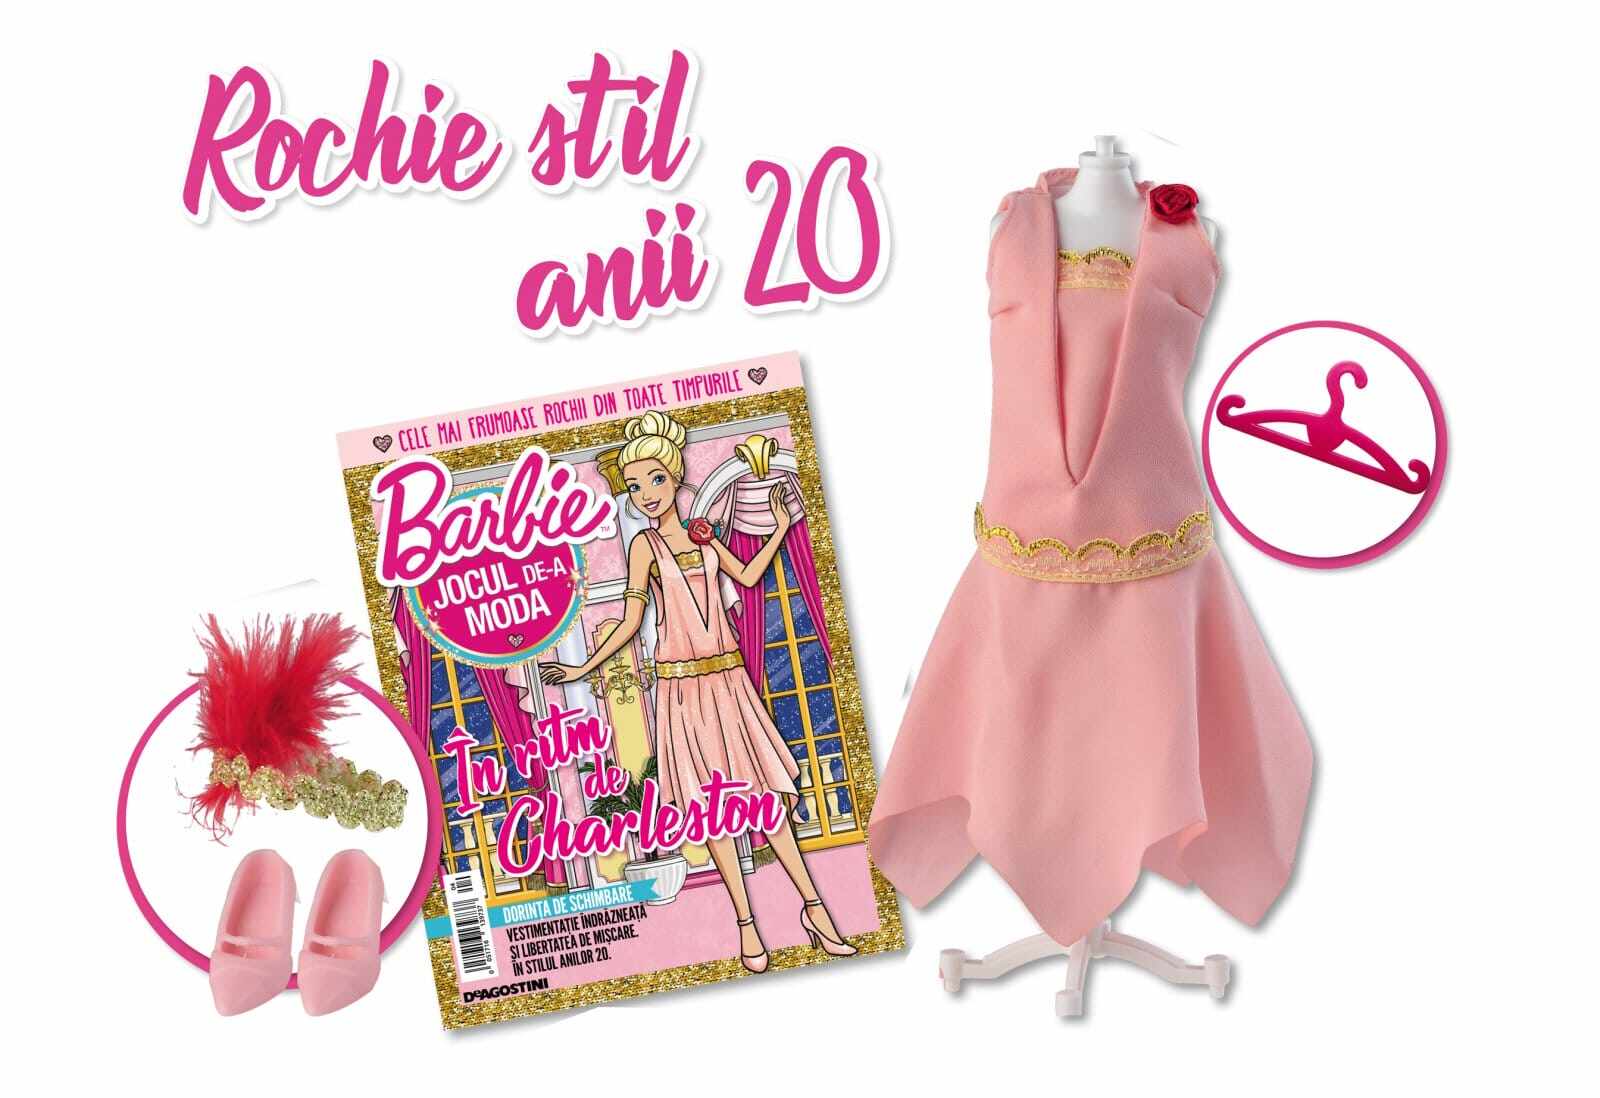 Colectia Barbie Jocul de-a Moda - Nr. 04 - Rochie stil anii 20, DeAgostini, 2-3 ani +